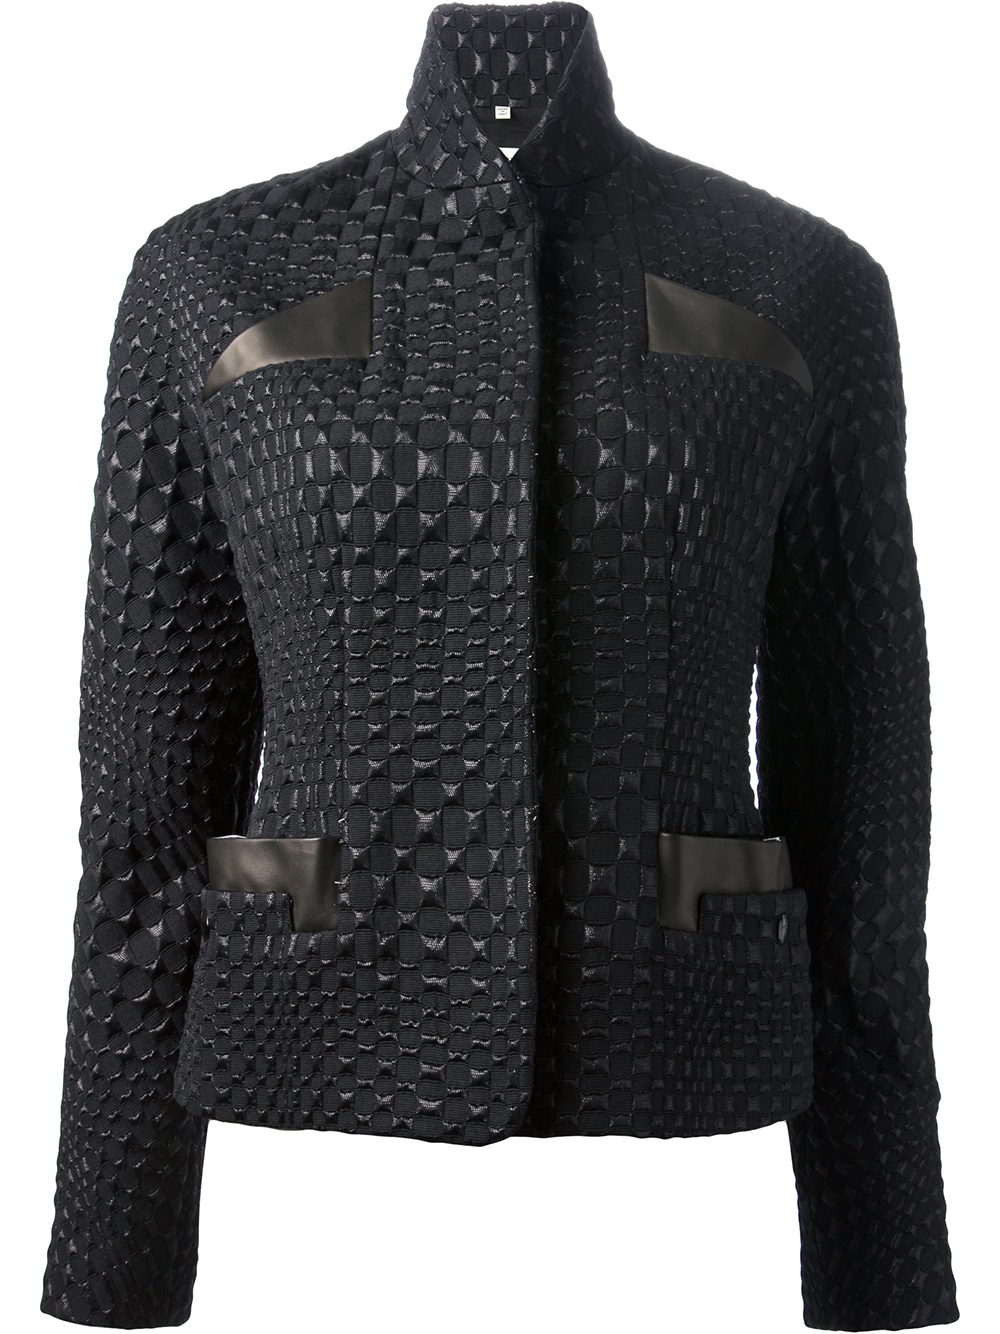 Lyst - Jean Paul Gaultier Textured Jacket in Black